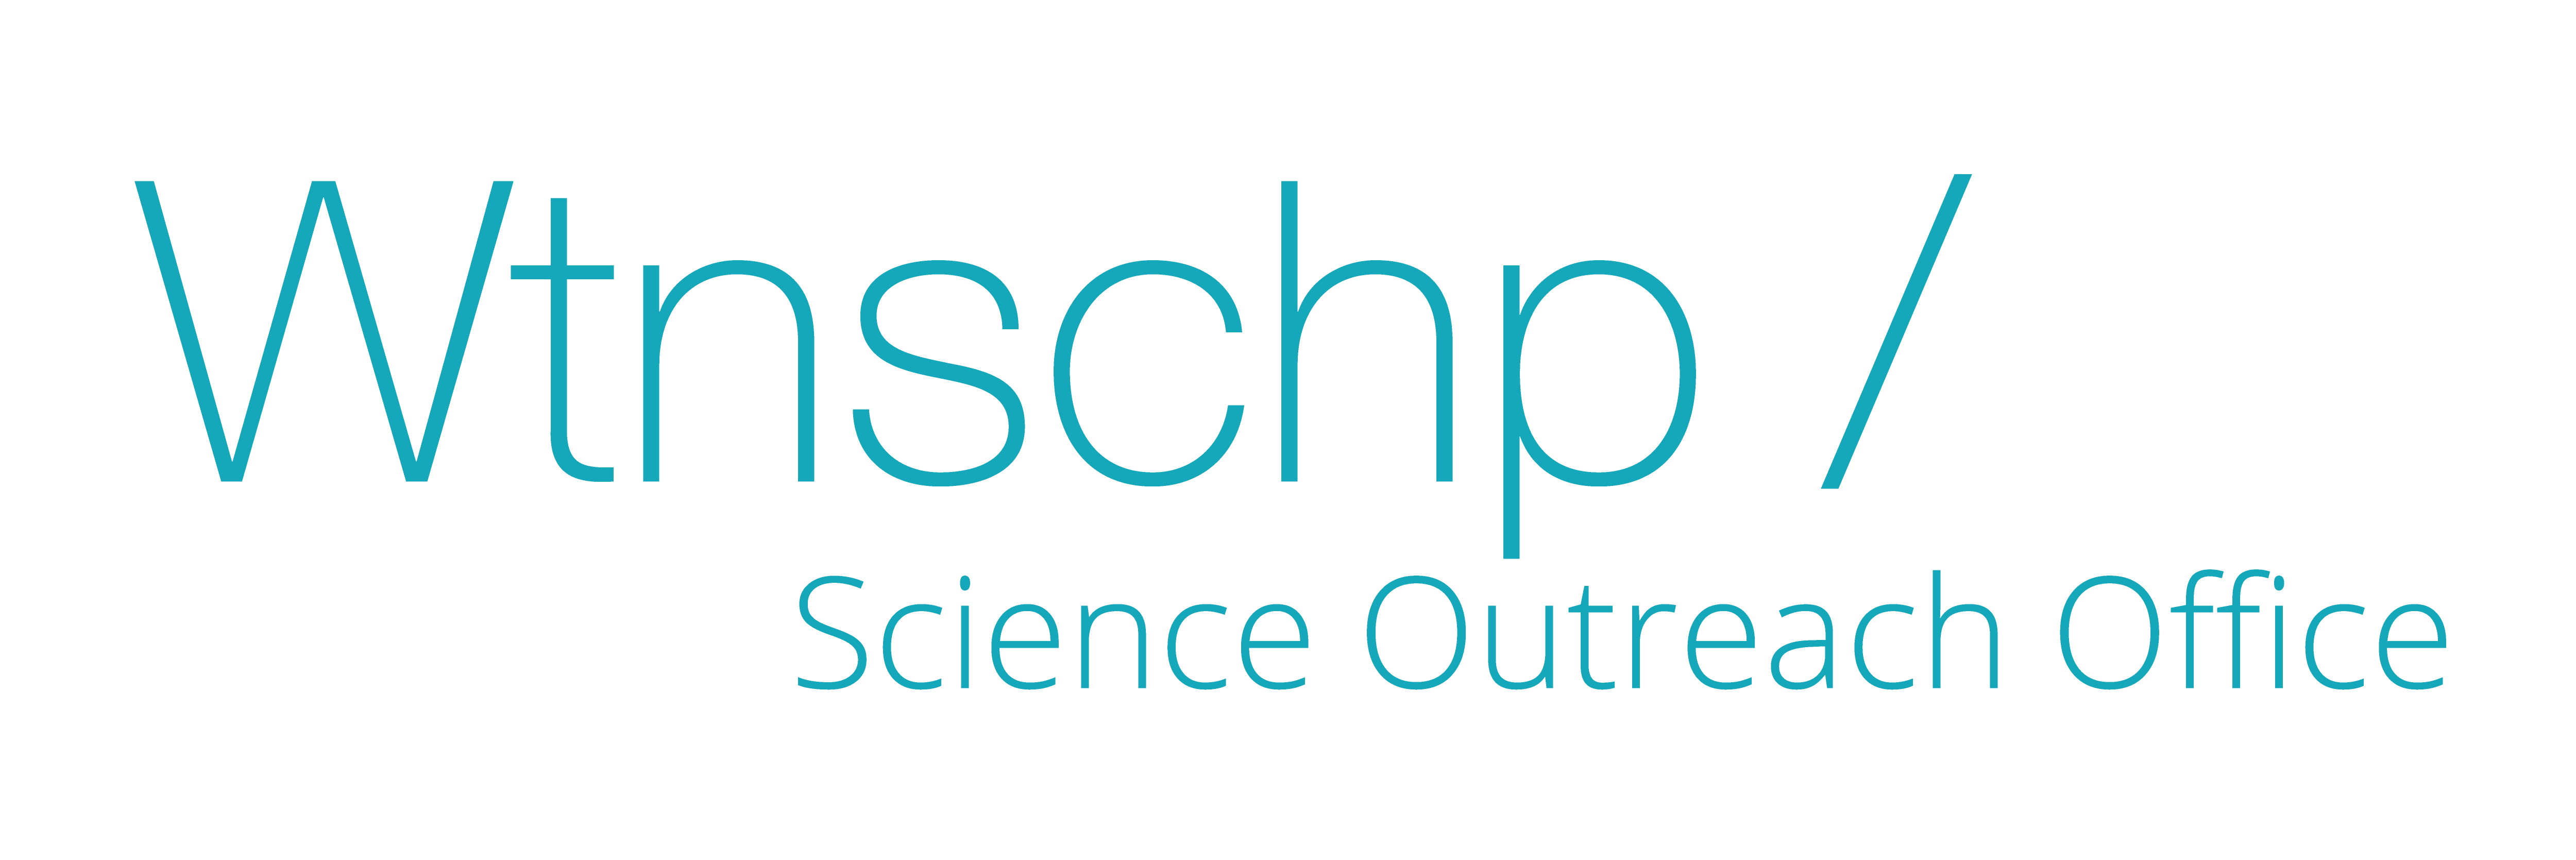 VUB Science Outreach Office logo